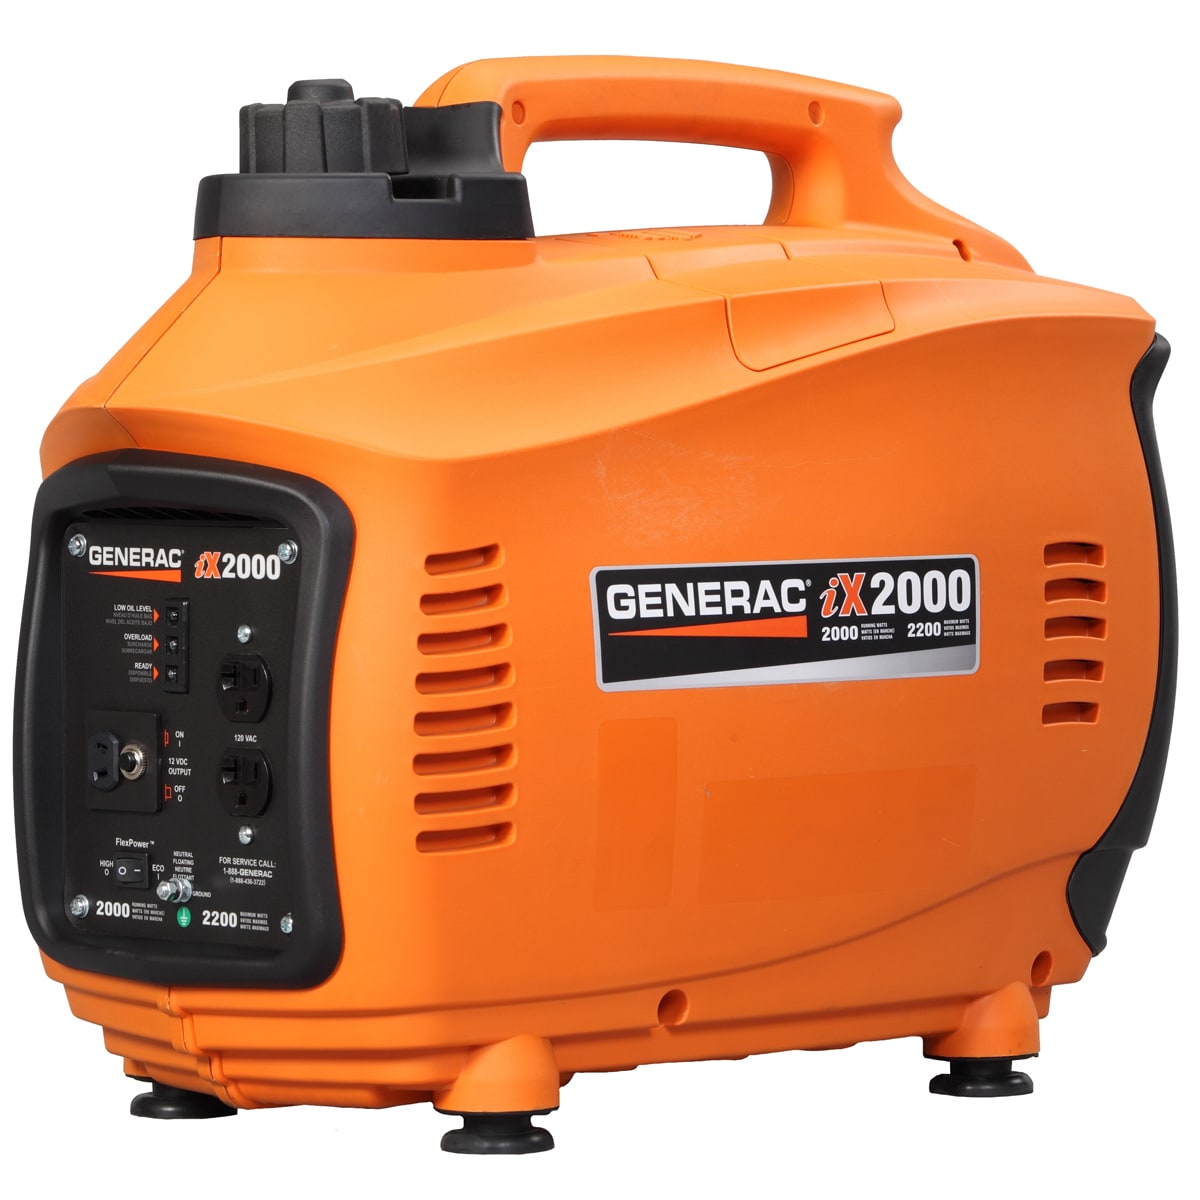 Generador Inverter 9 000 Watts, GI90MG1400THWAE